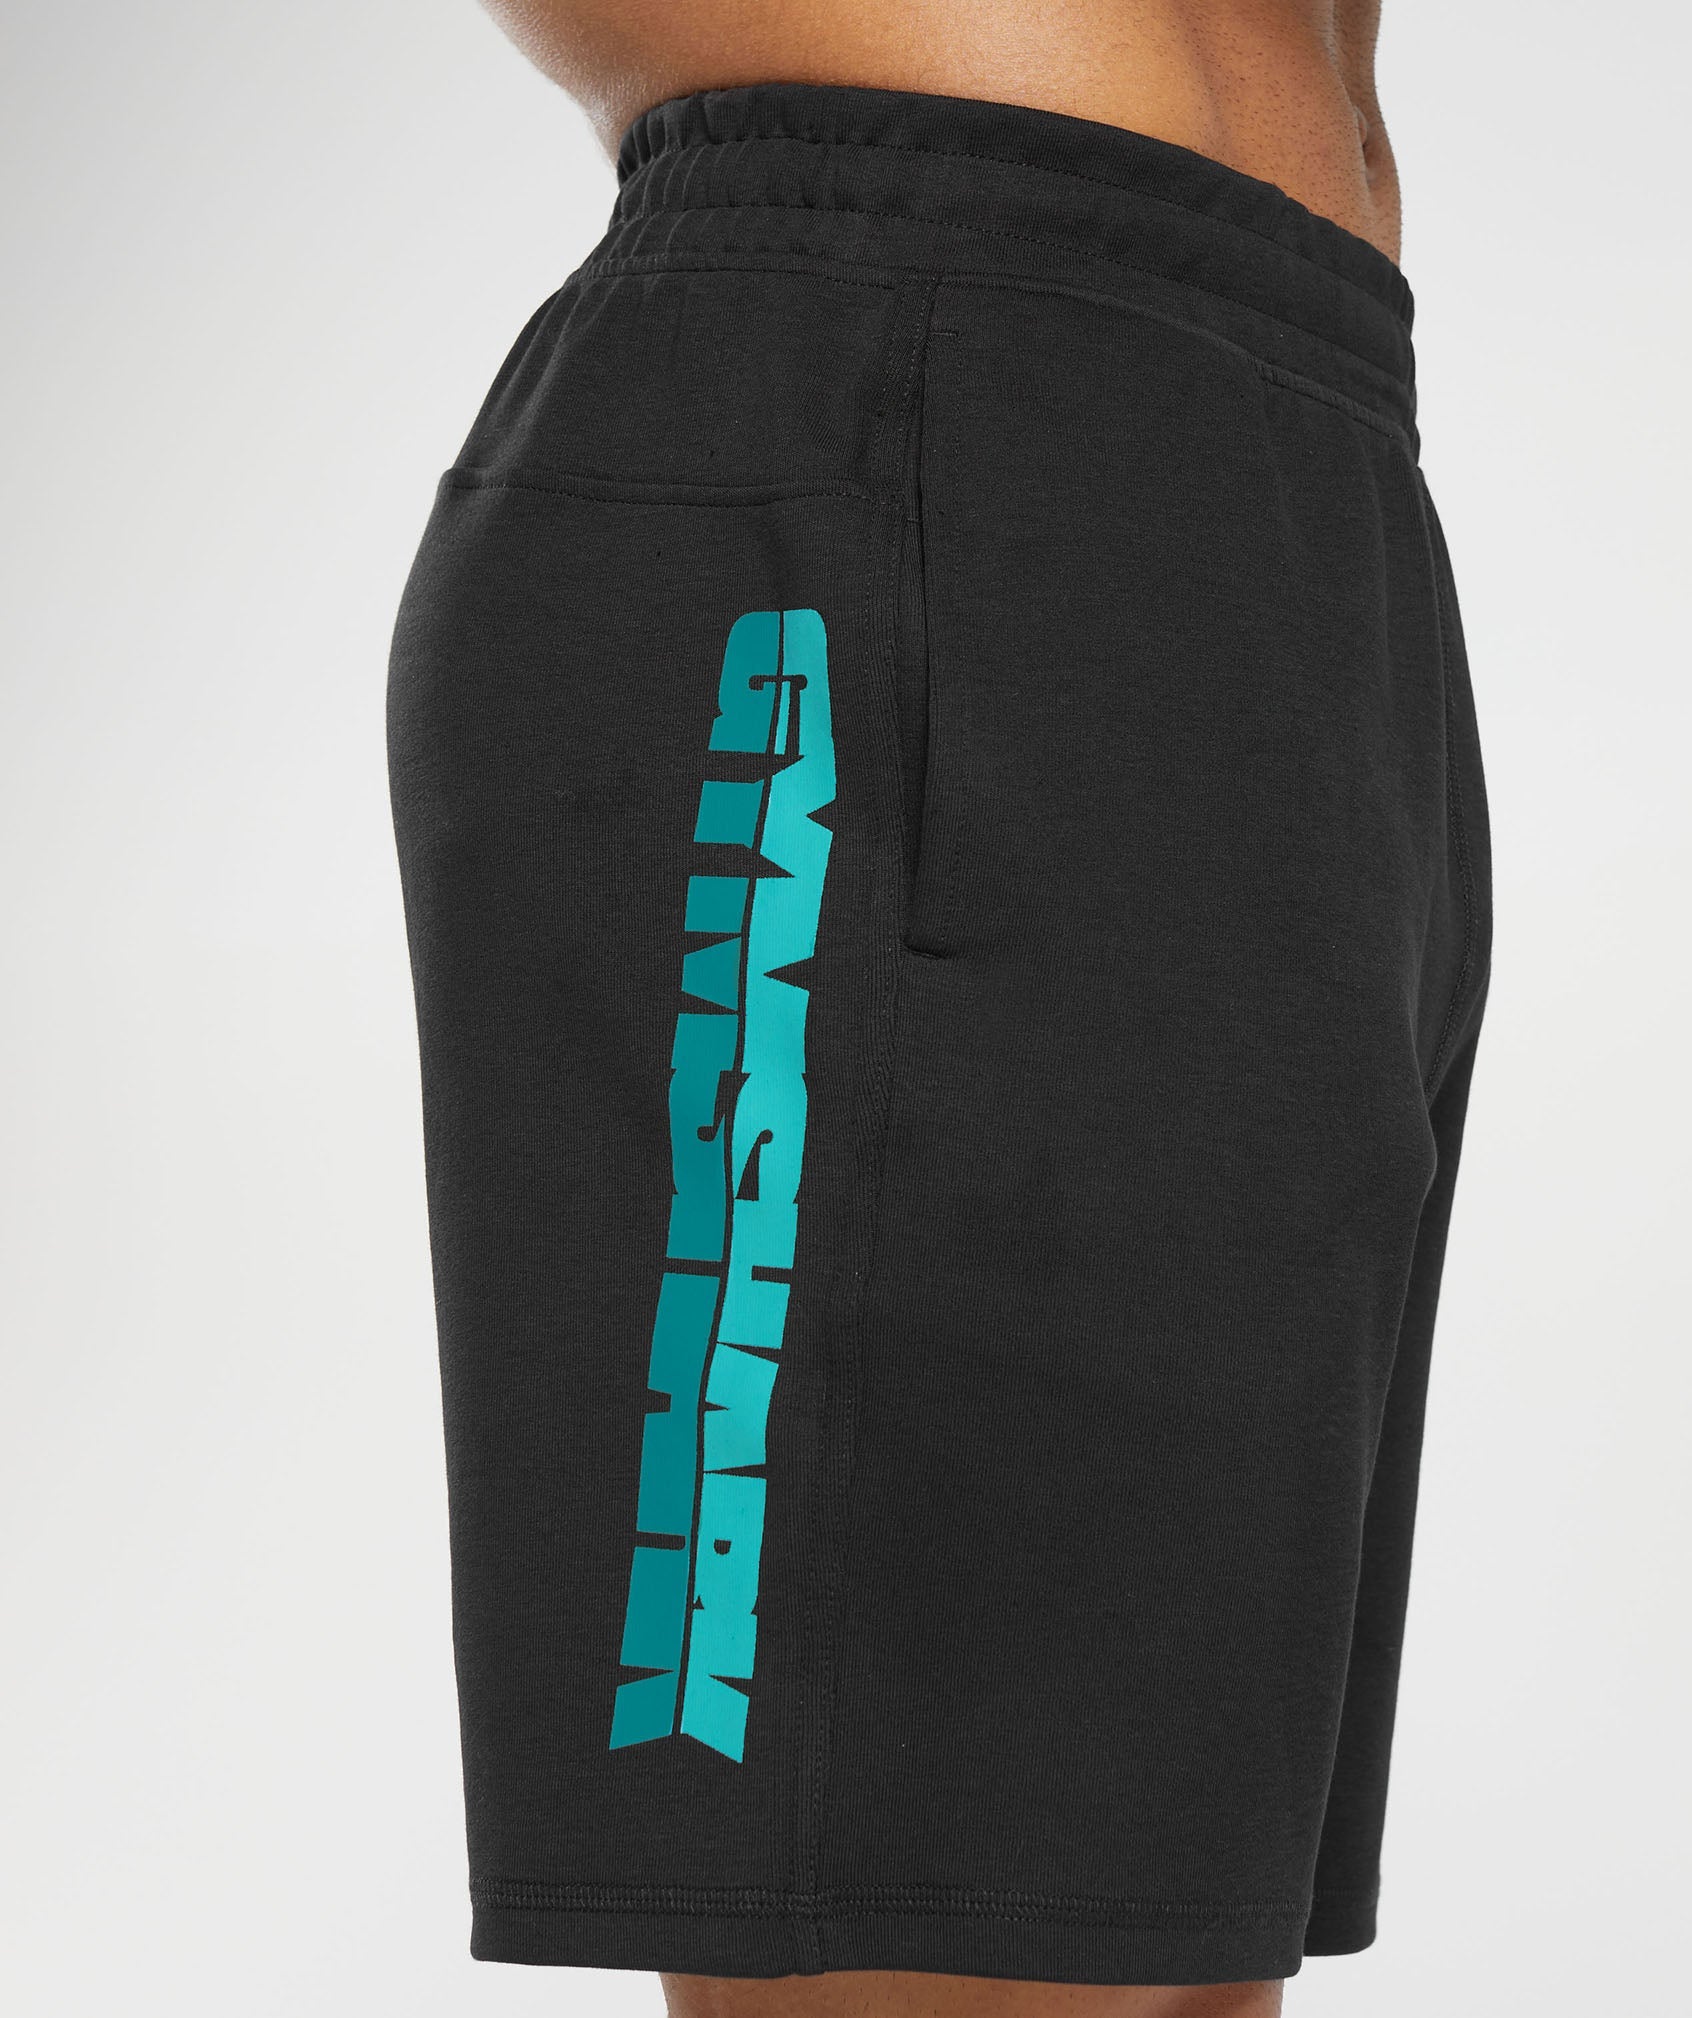 Gymshark Bold 7 Shorts - Black